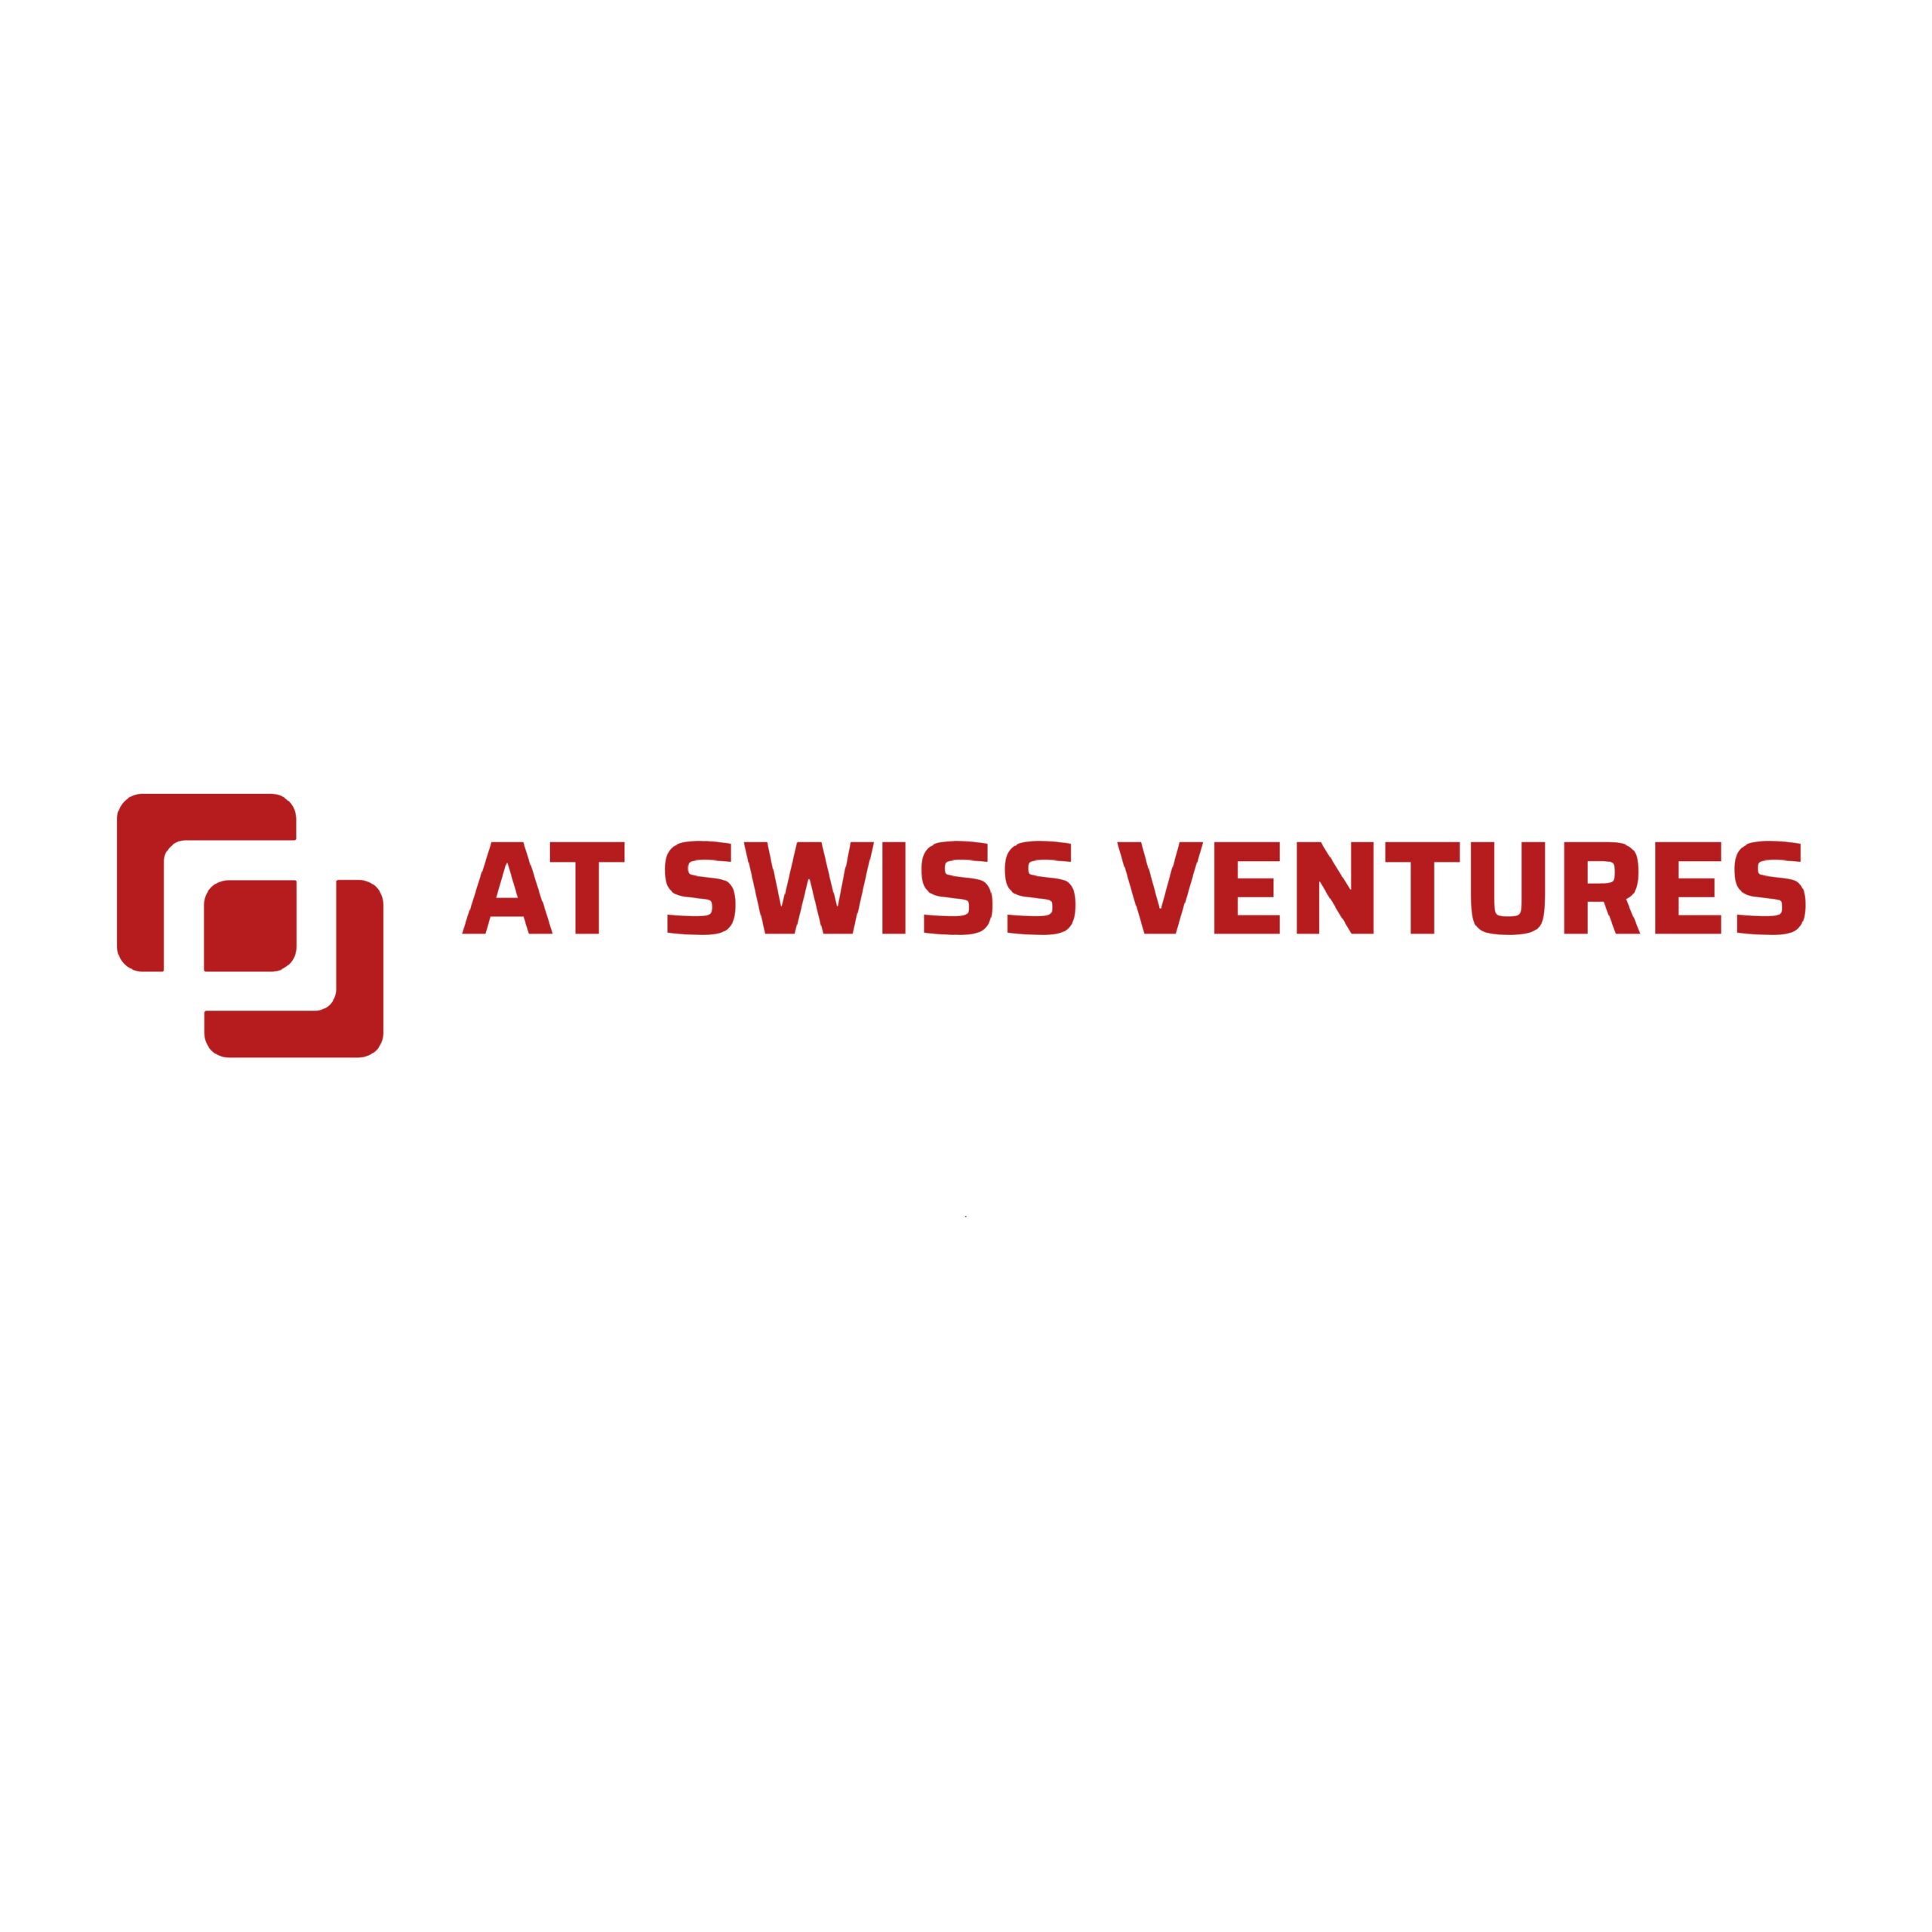 AT Swiss Ventures